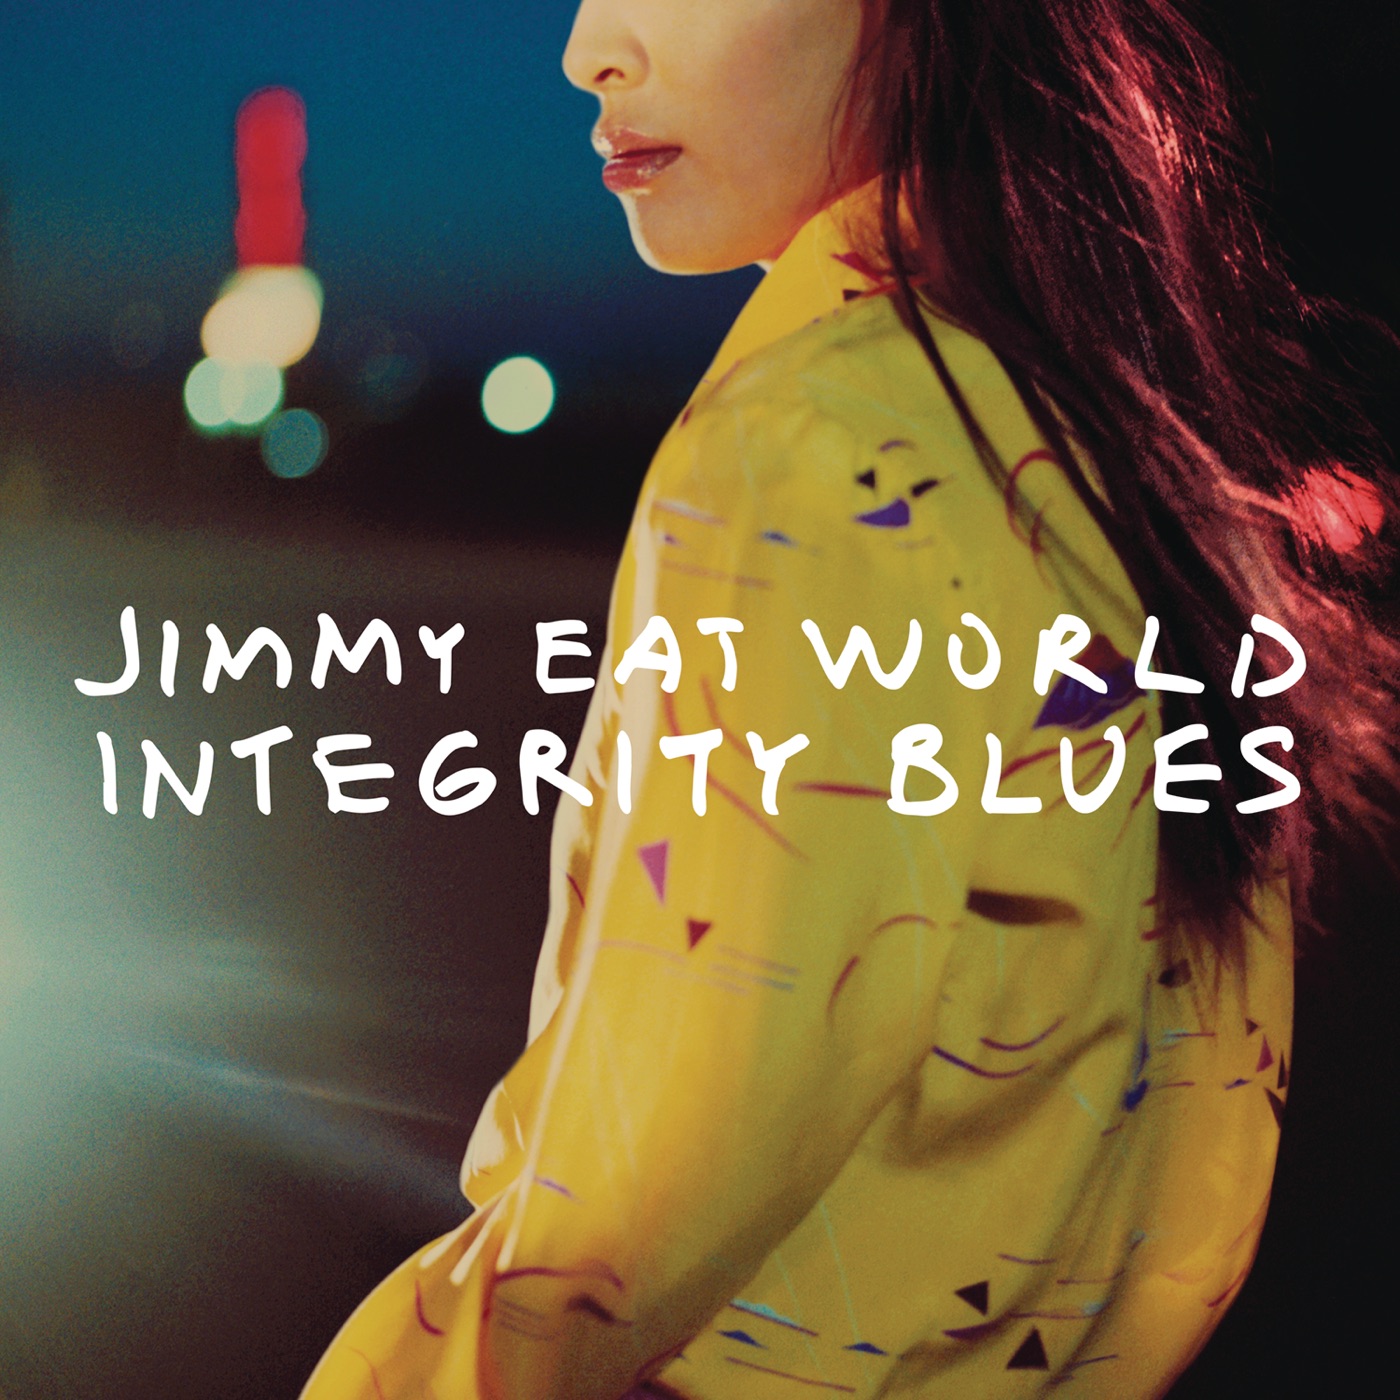 Integrity Blues by Jimmy Eat World